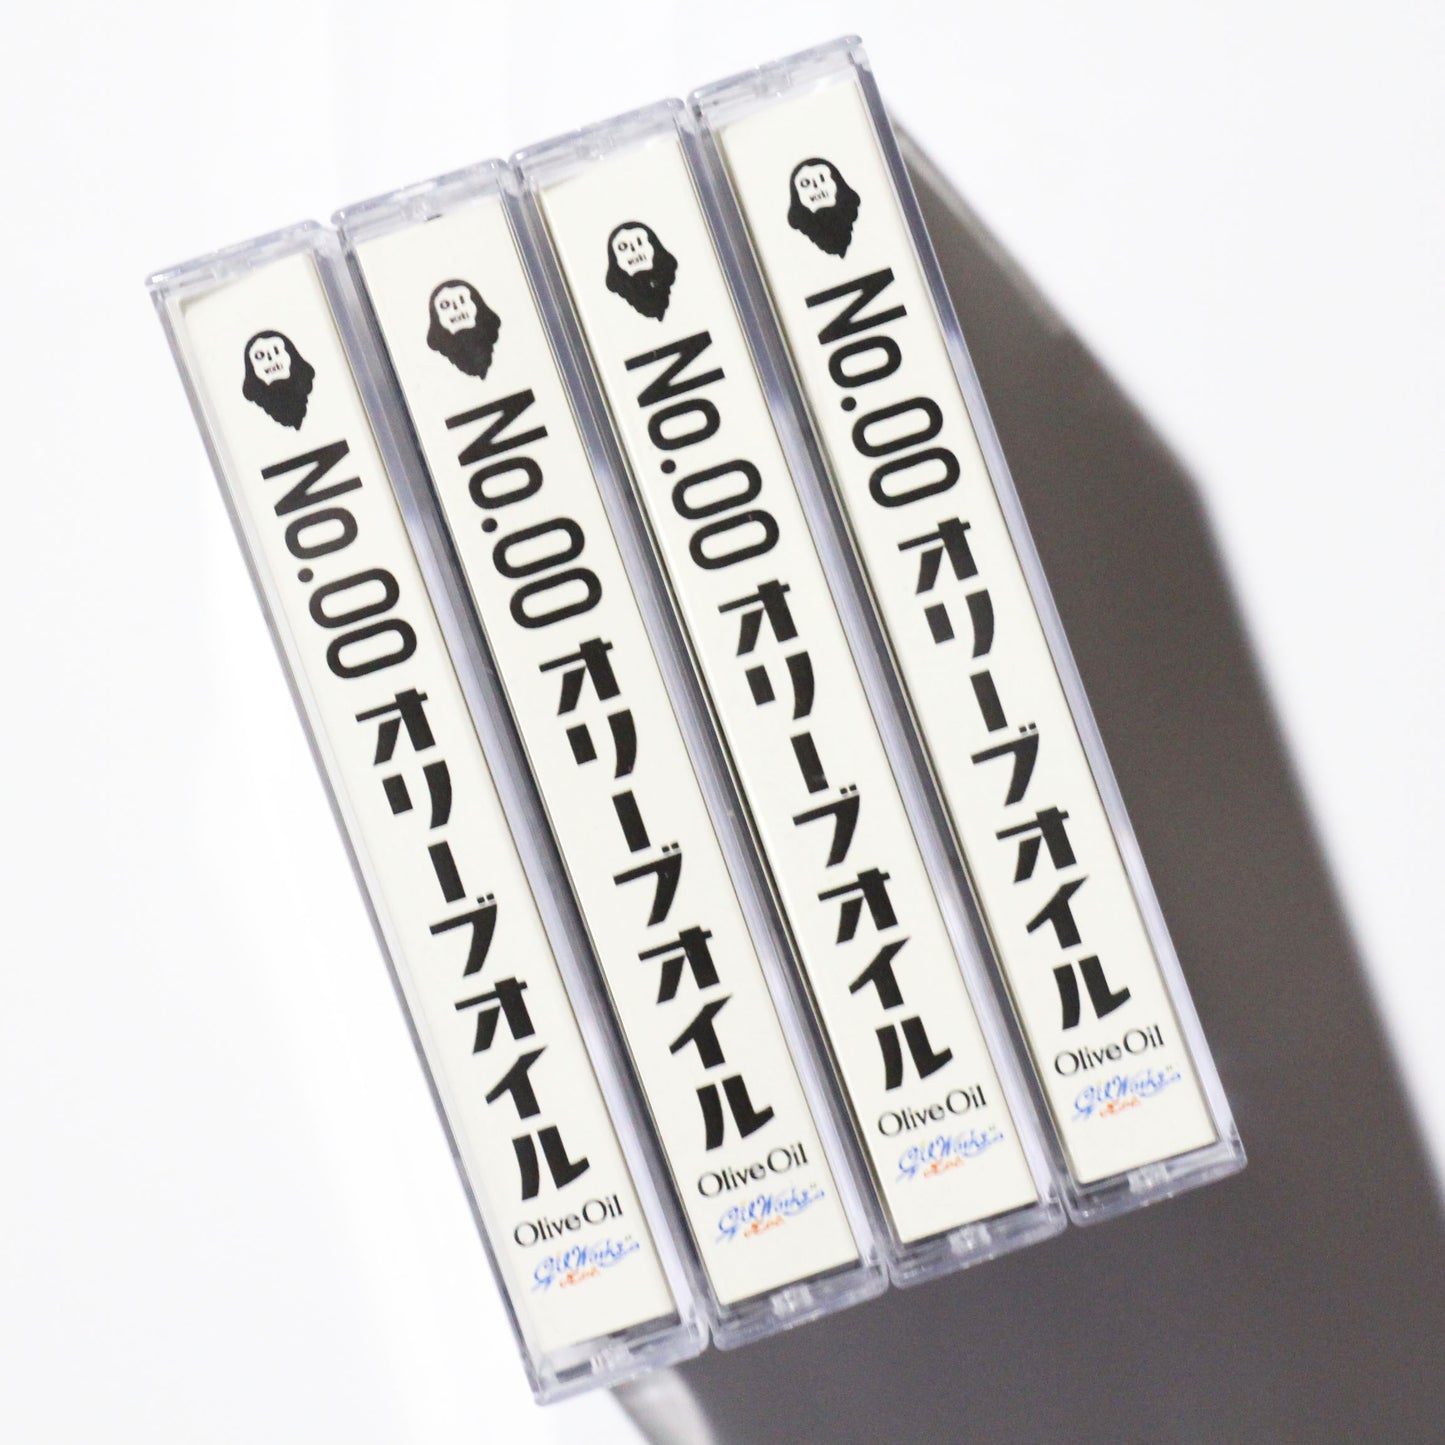 Olive Oil / No.00 [Cassette Tape]